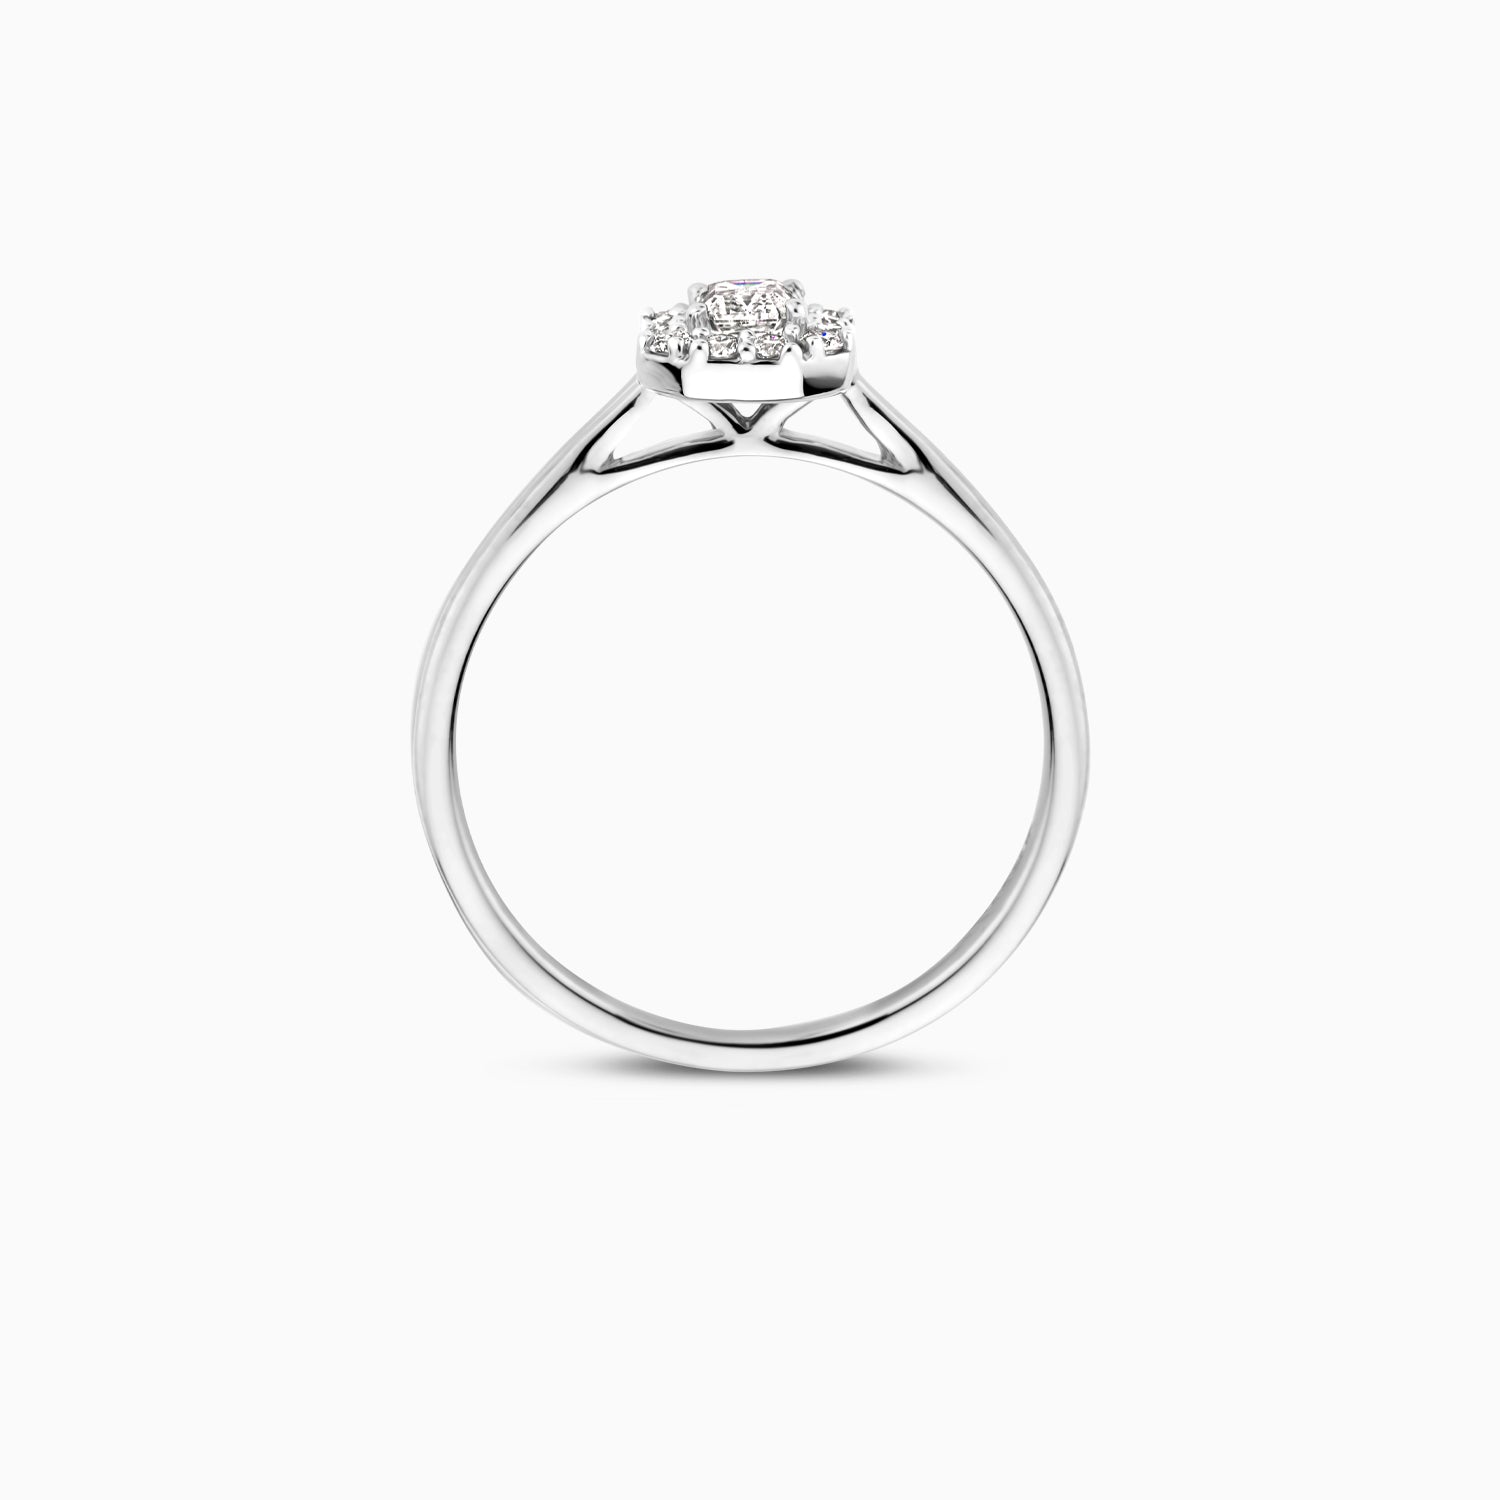 Lab diamonds ring LG1010W - 14k White gold